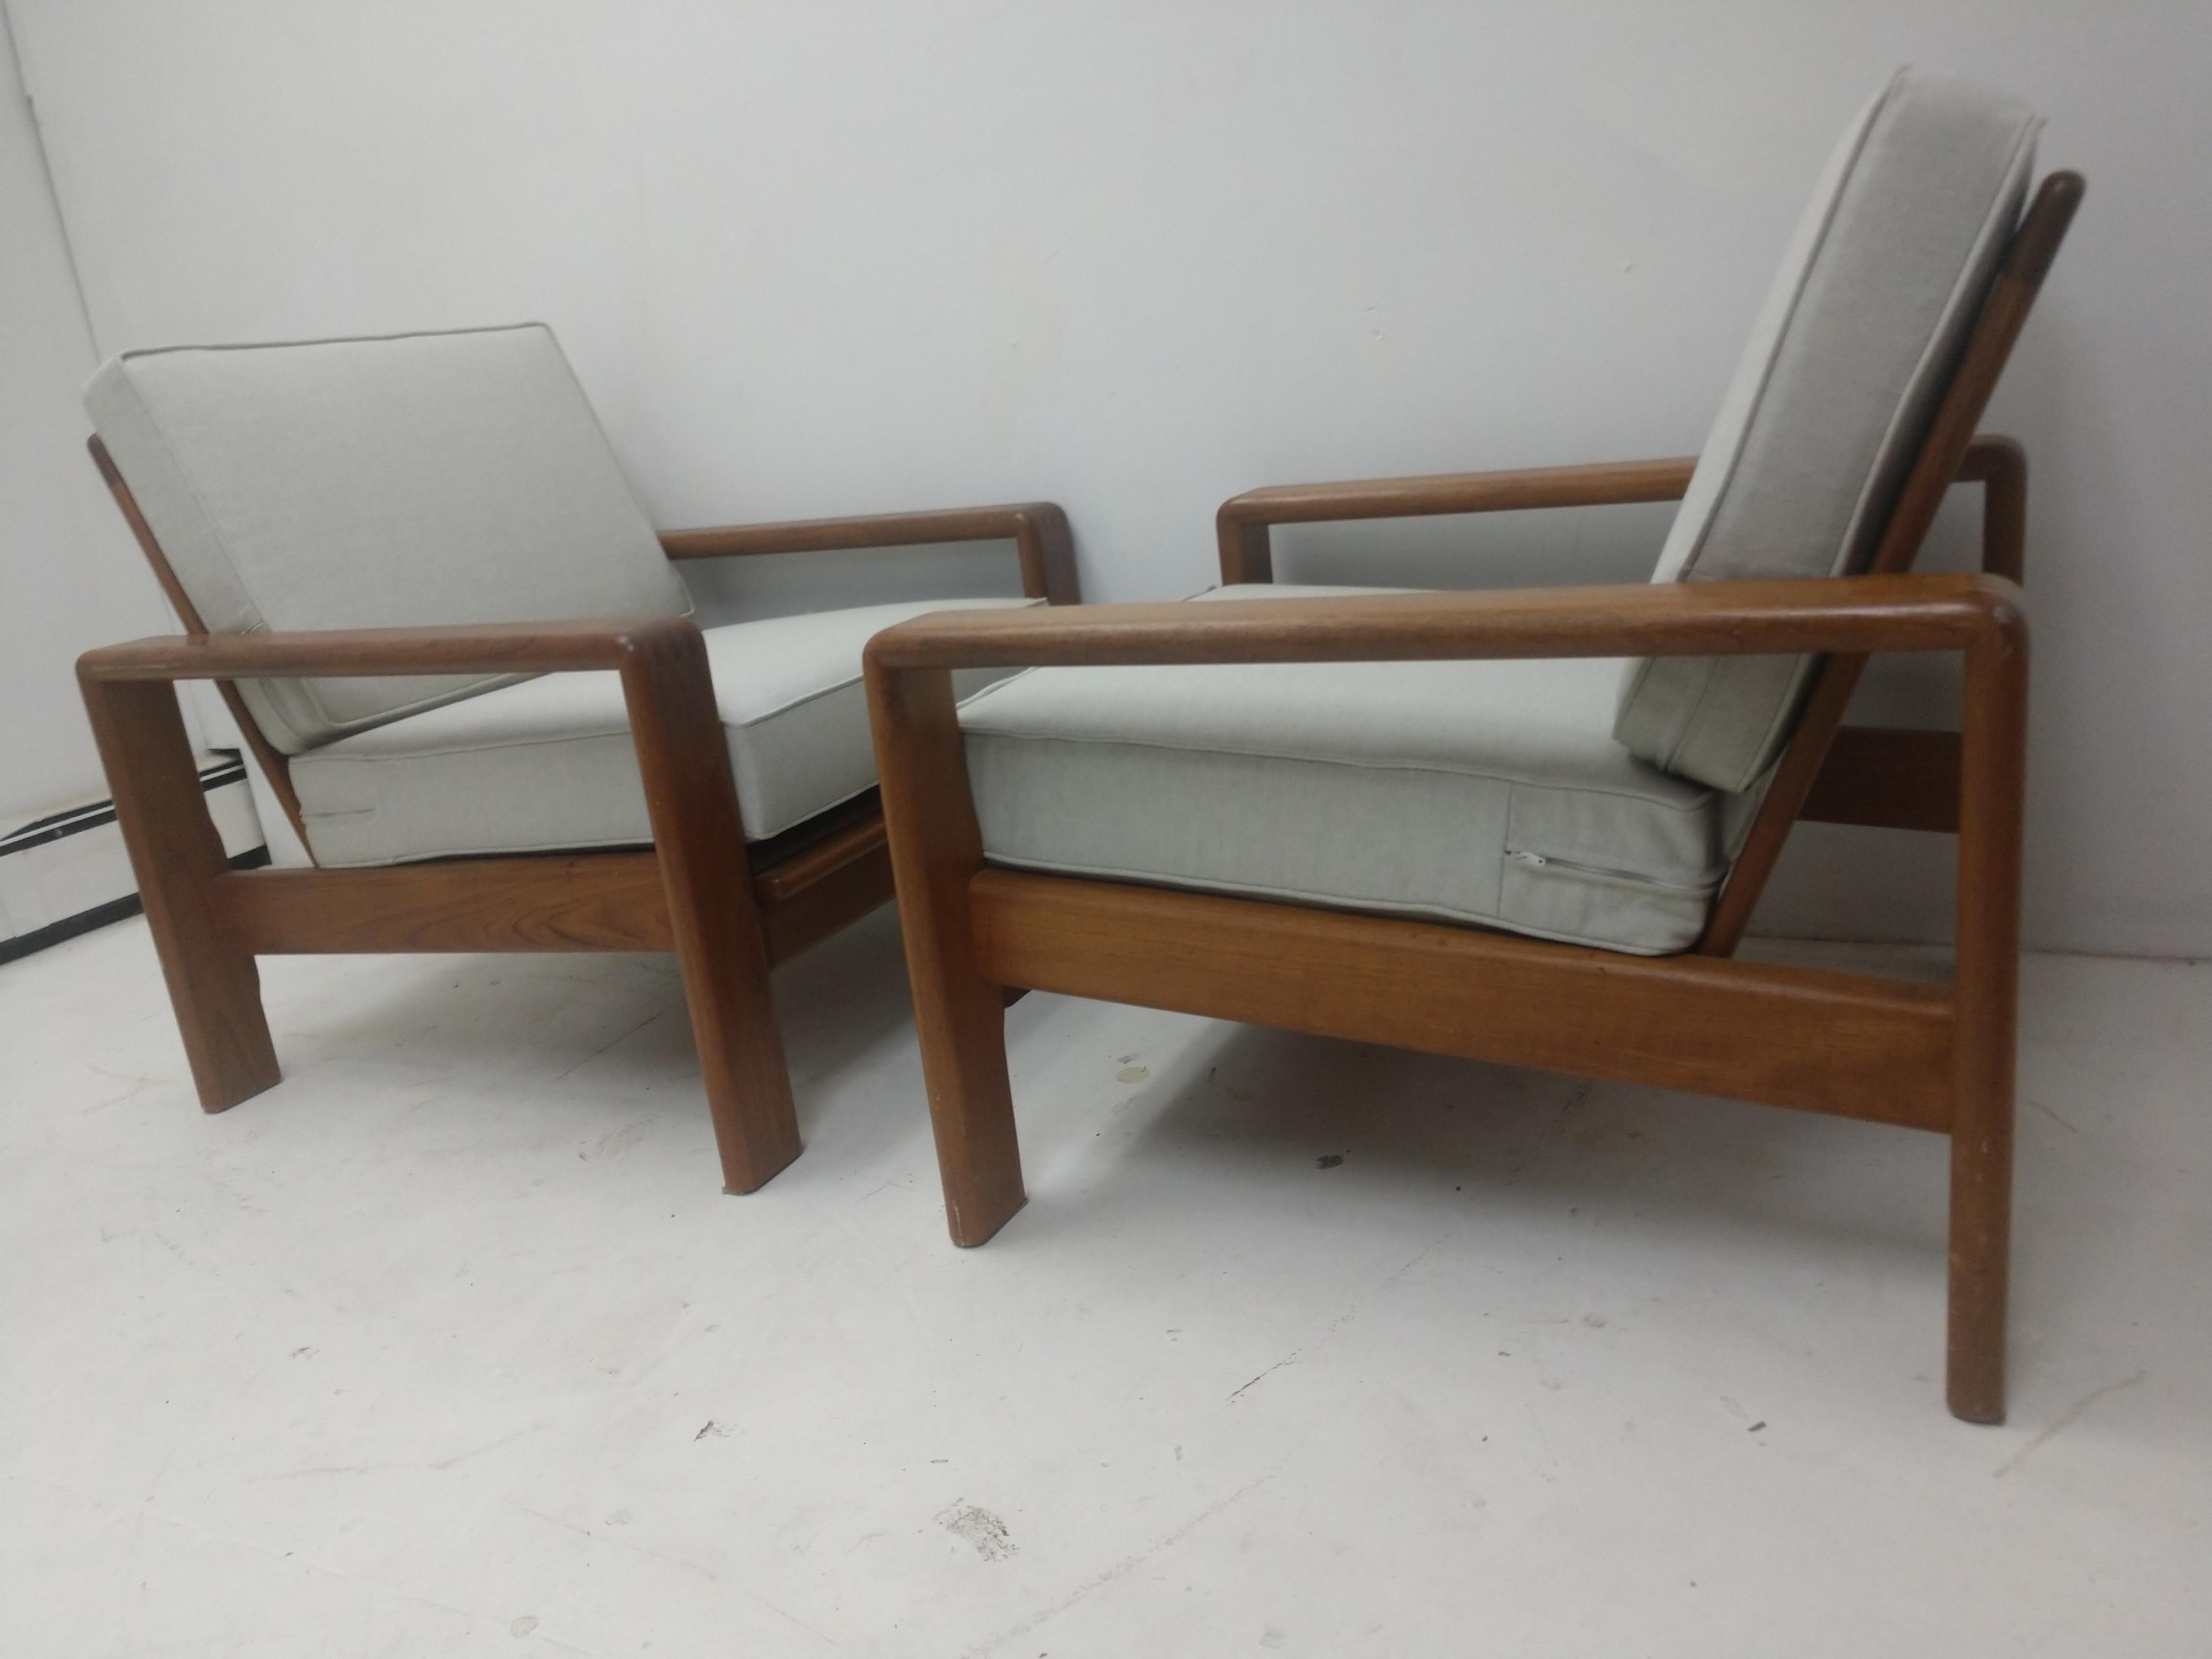 Hand-Crafted Pair of Midcentury Danish Teak Lounge Chairs, circa 1965